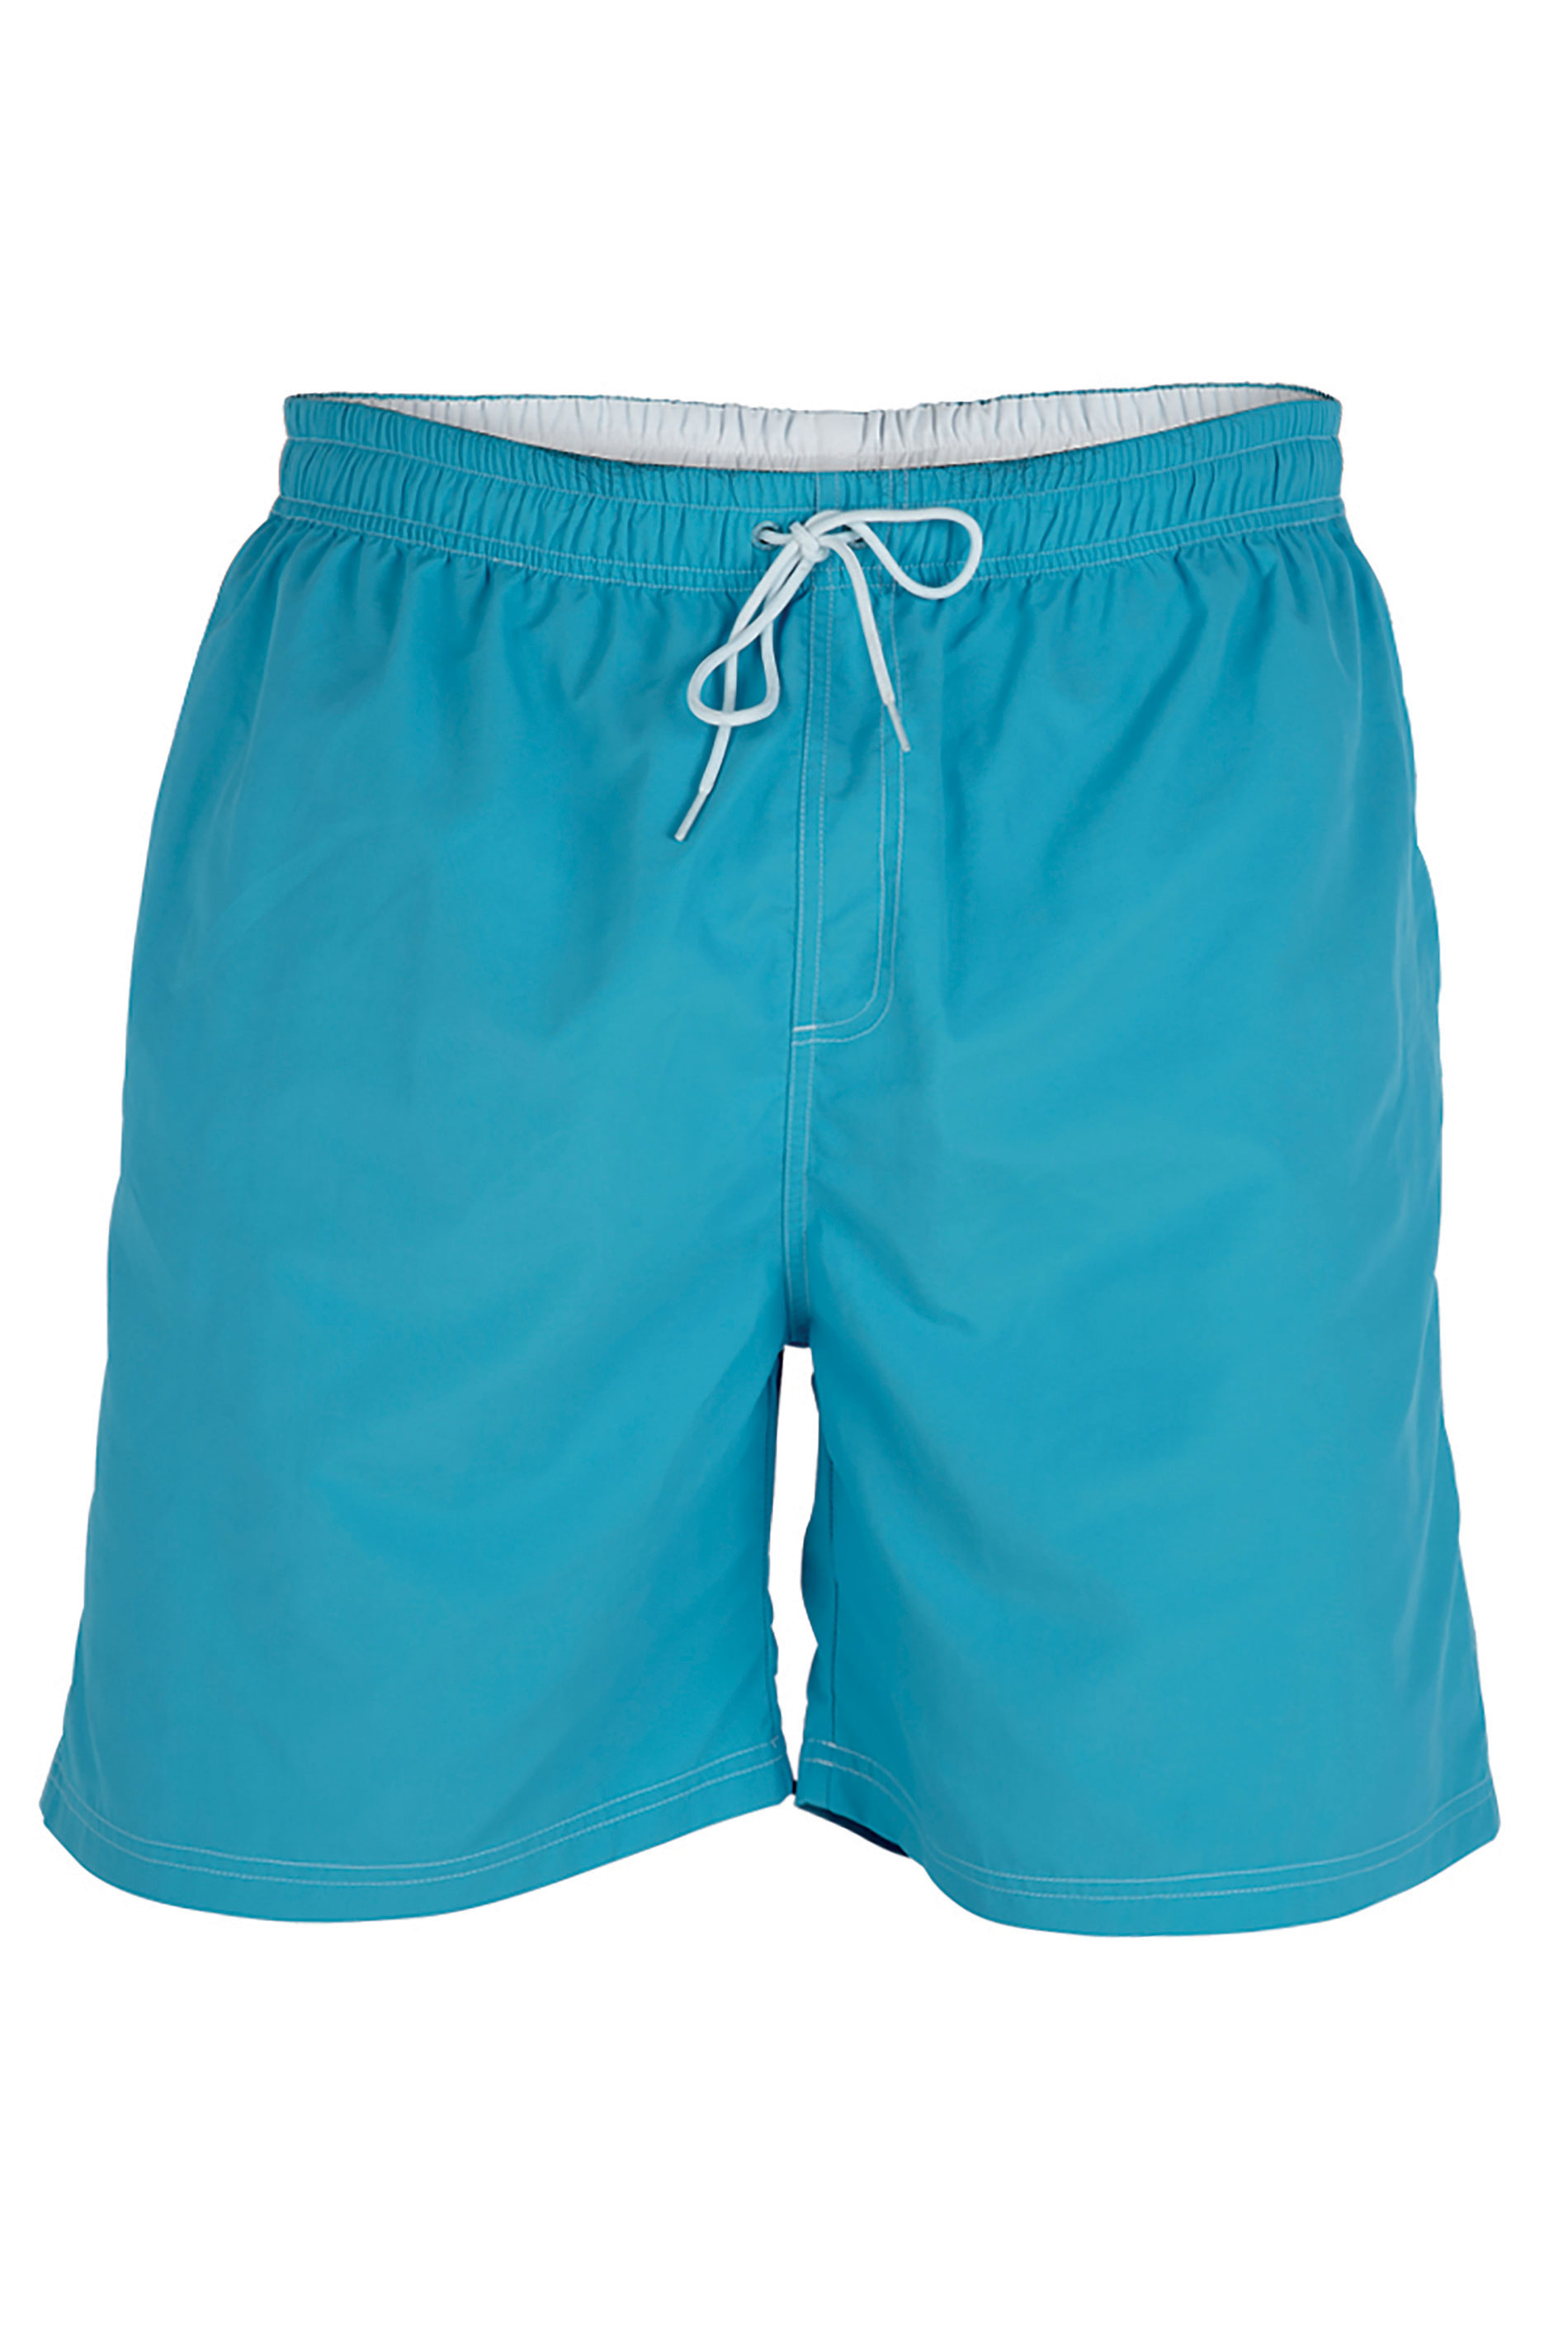 D555 Royal Blue Full Length Swim Shorts_F.jpg